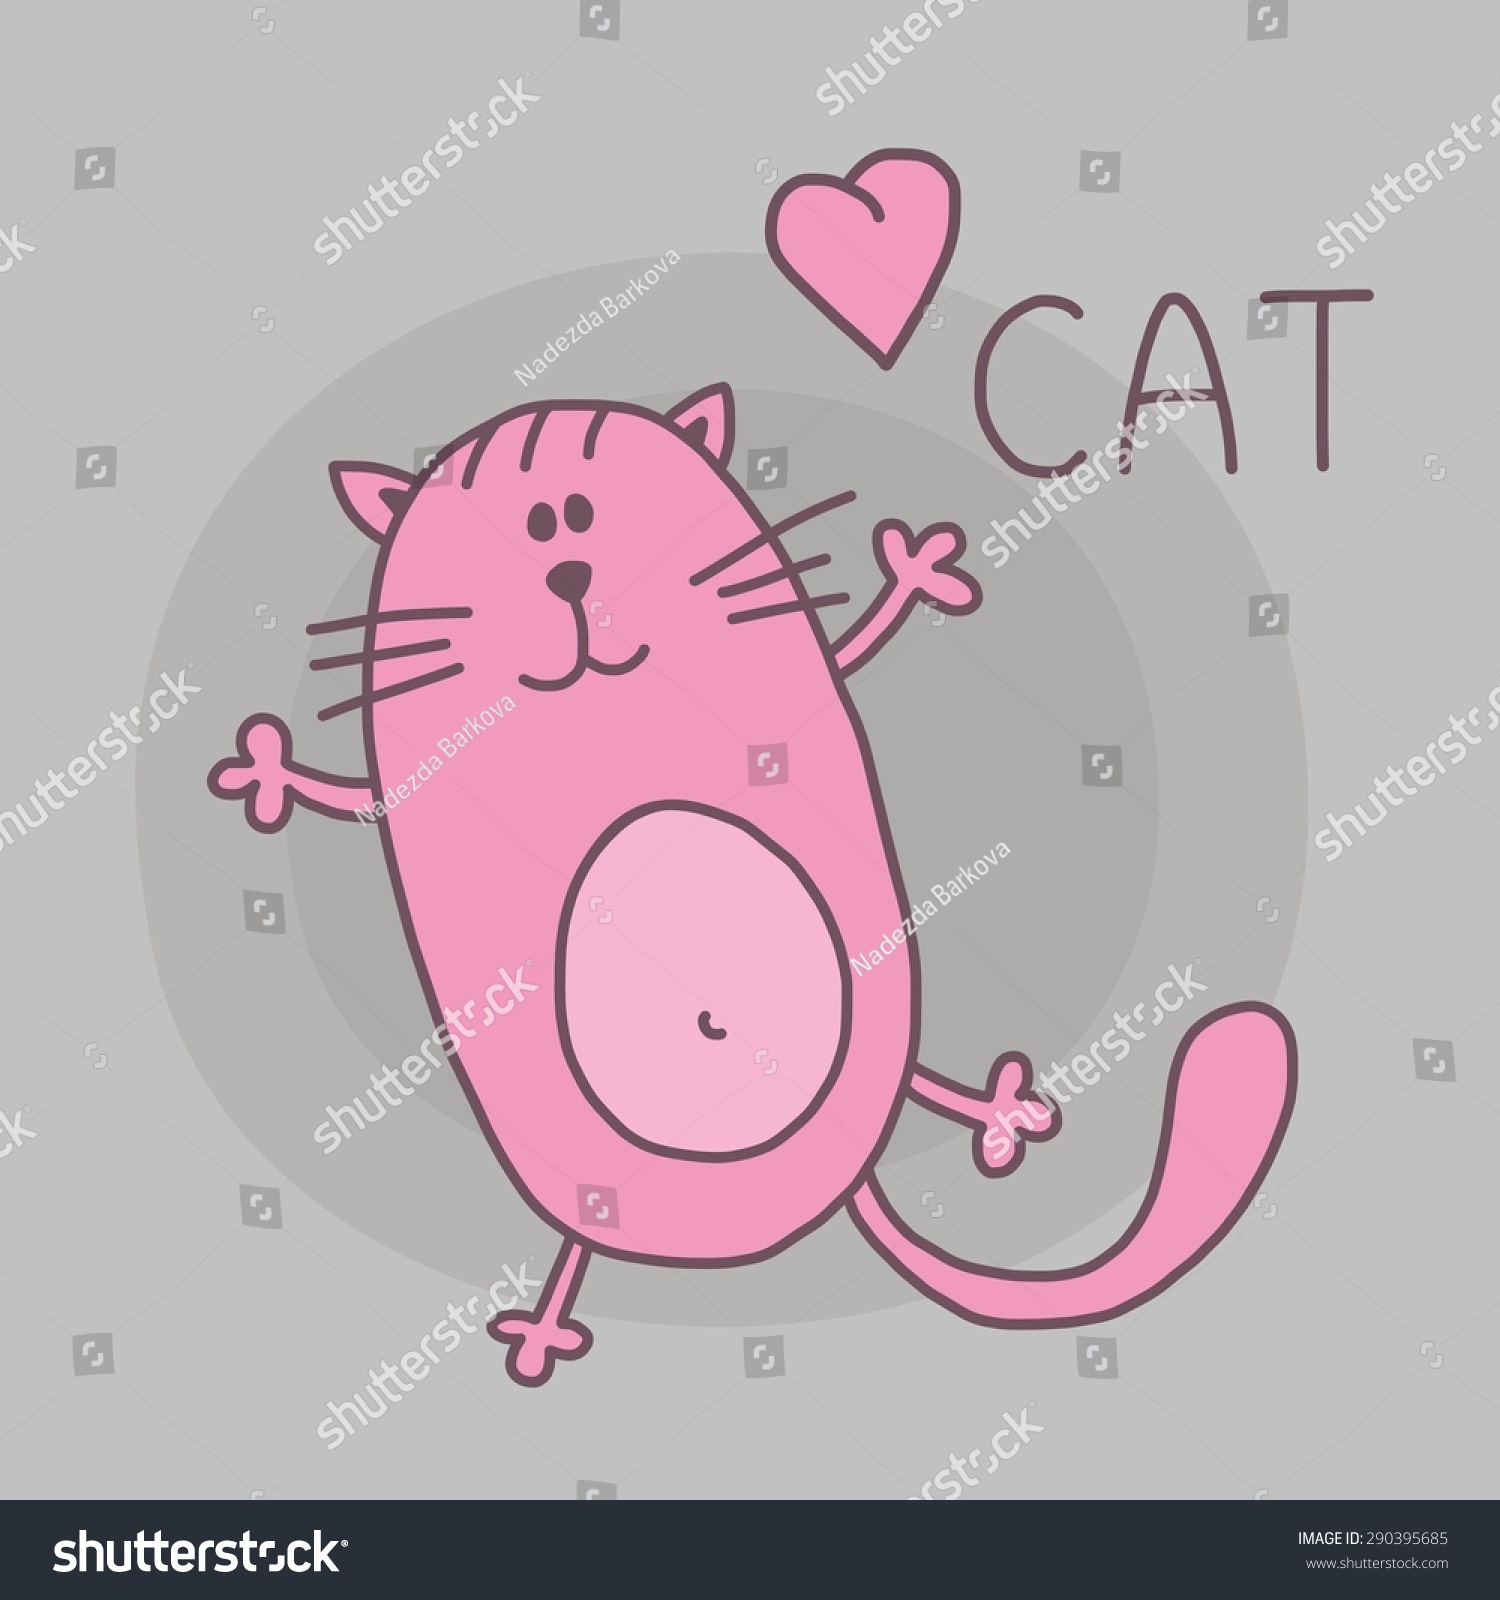 Funny Cat Vector Pattern Design - 290395685 : Shutterstock